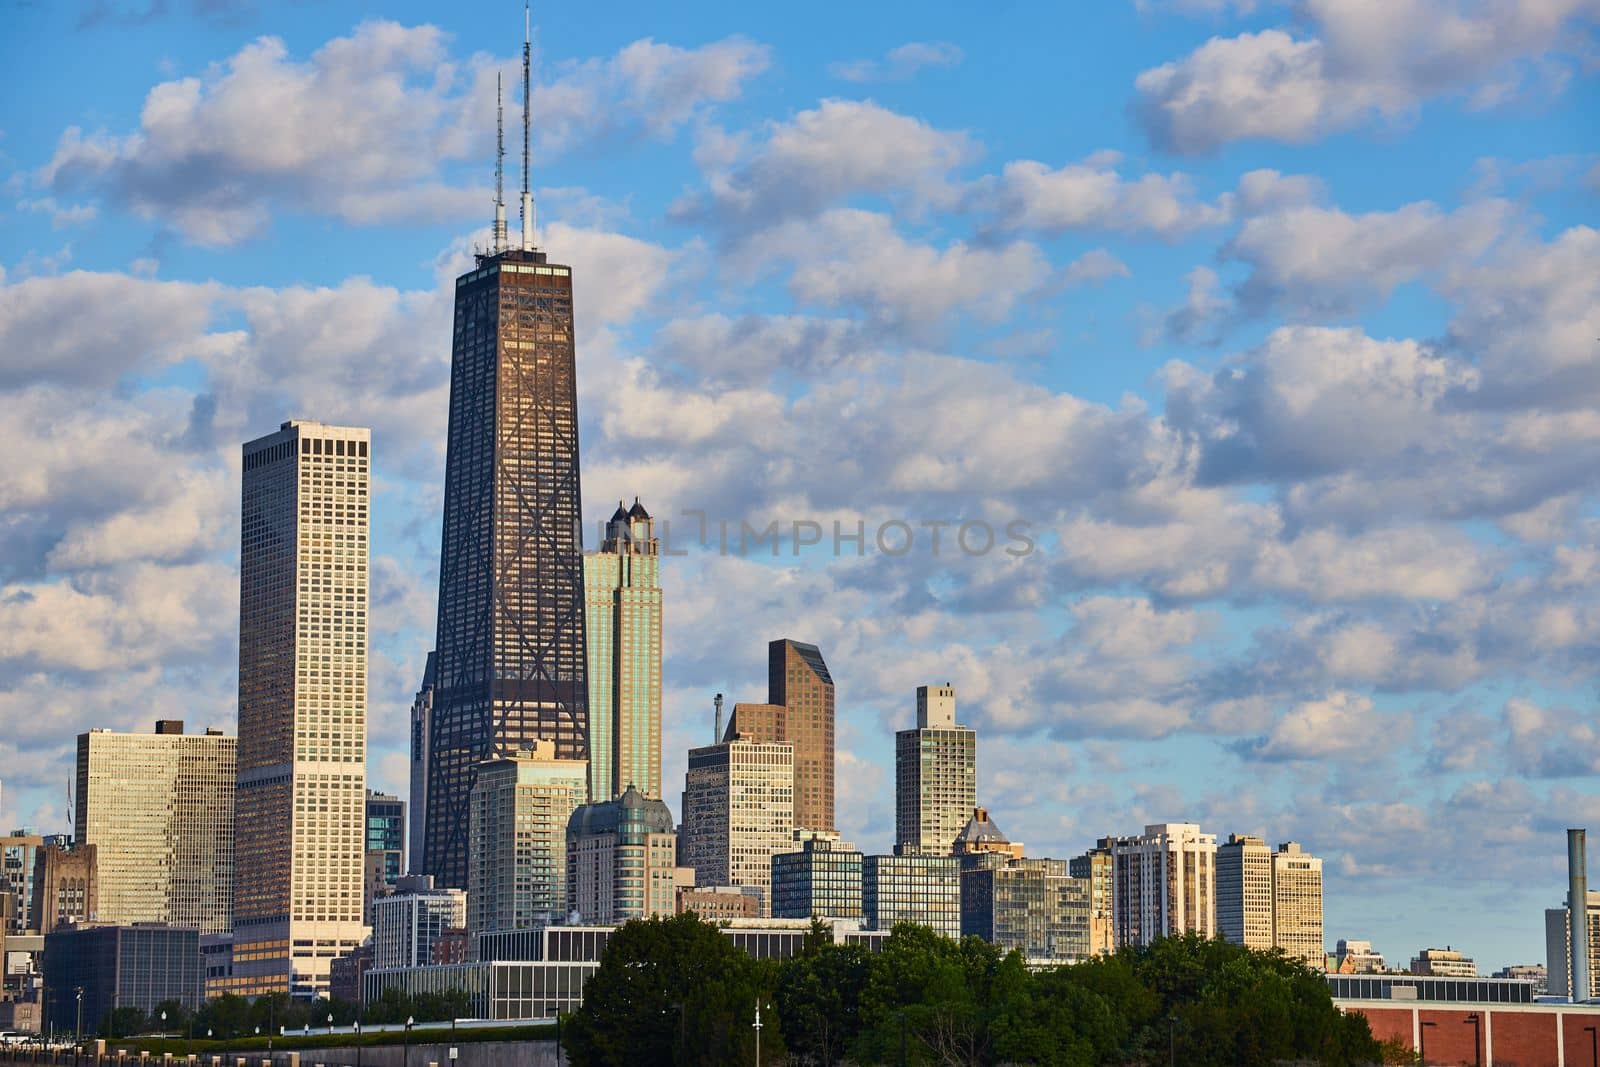 Image of Chicago skyline in morning light with John Hancock skyscraper